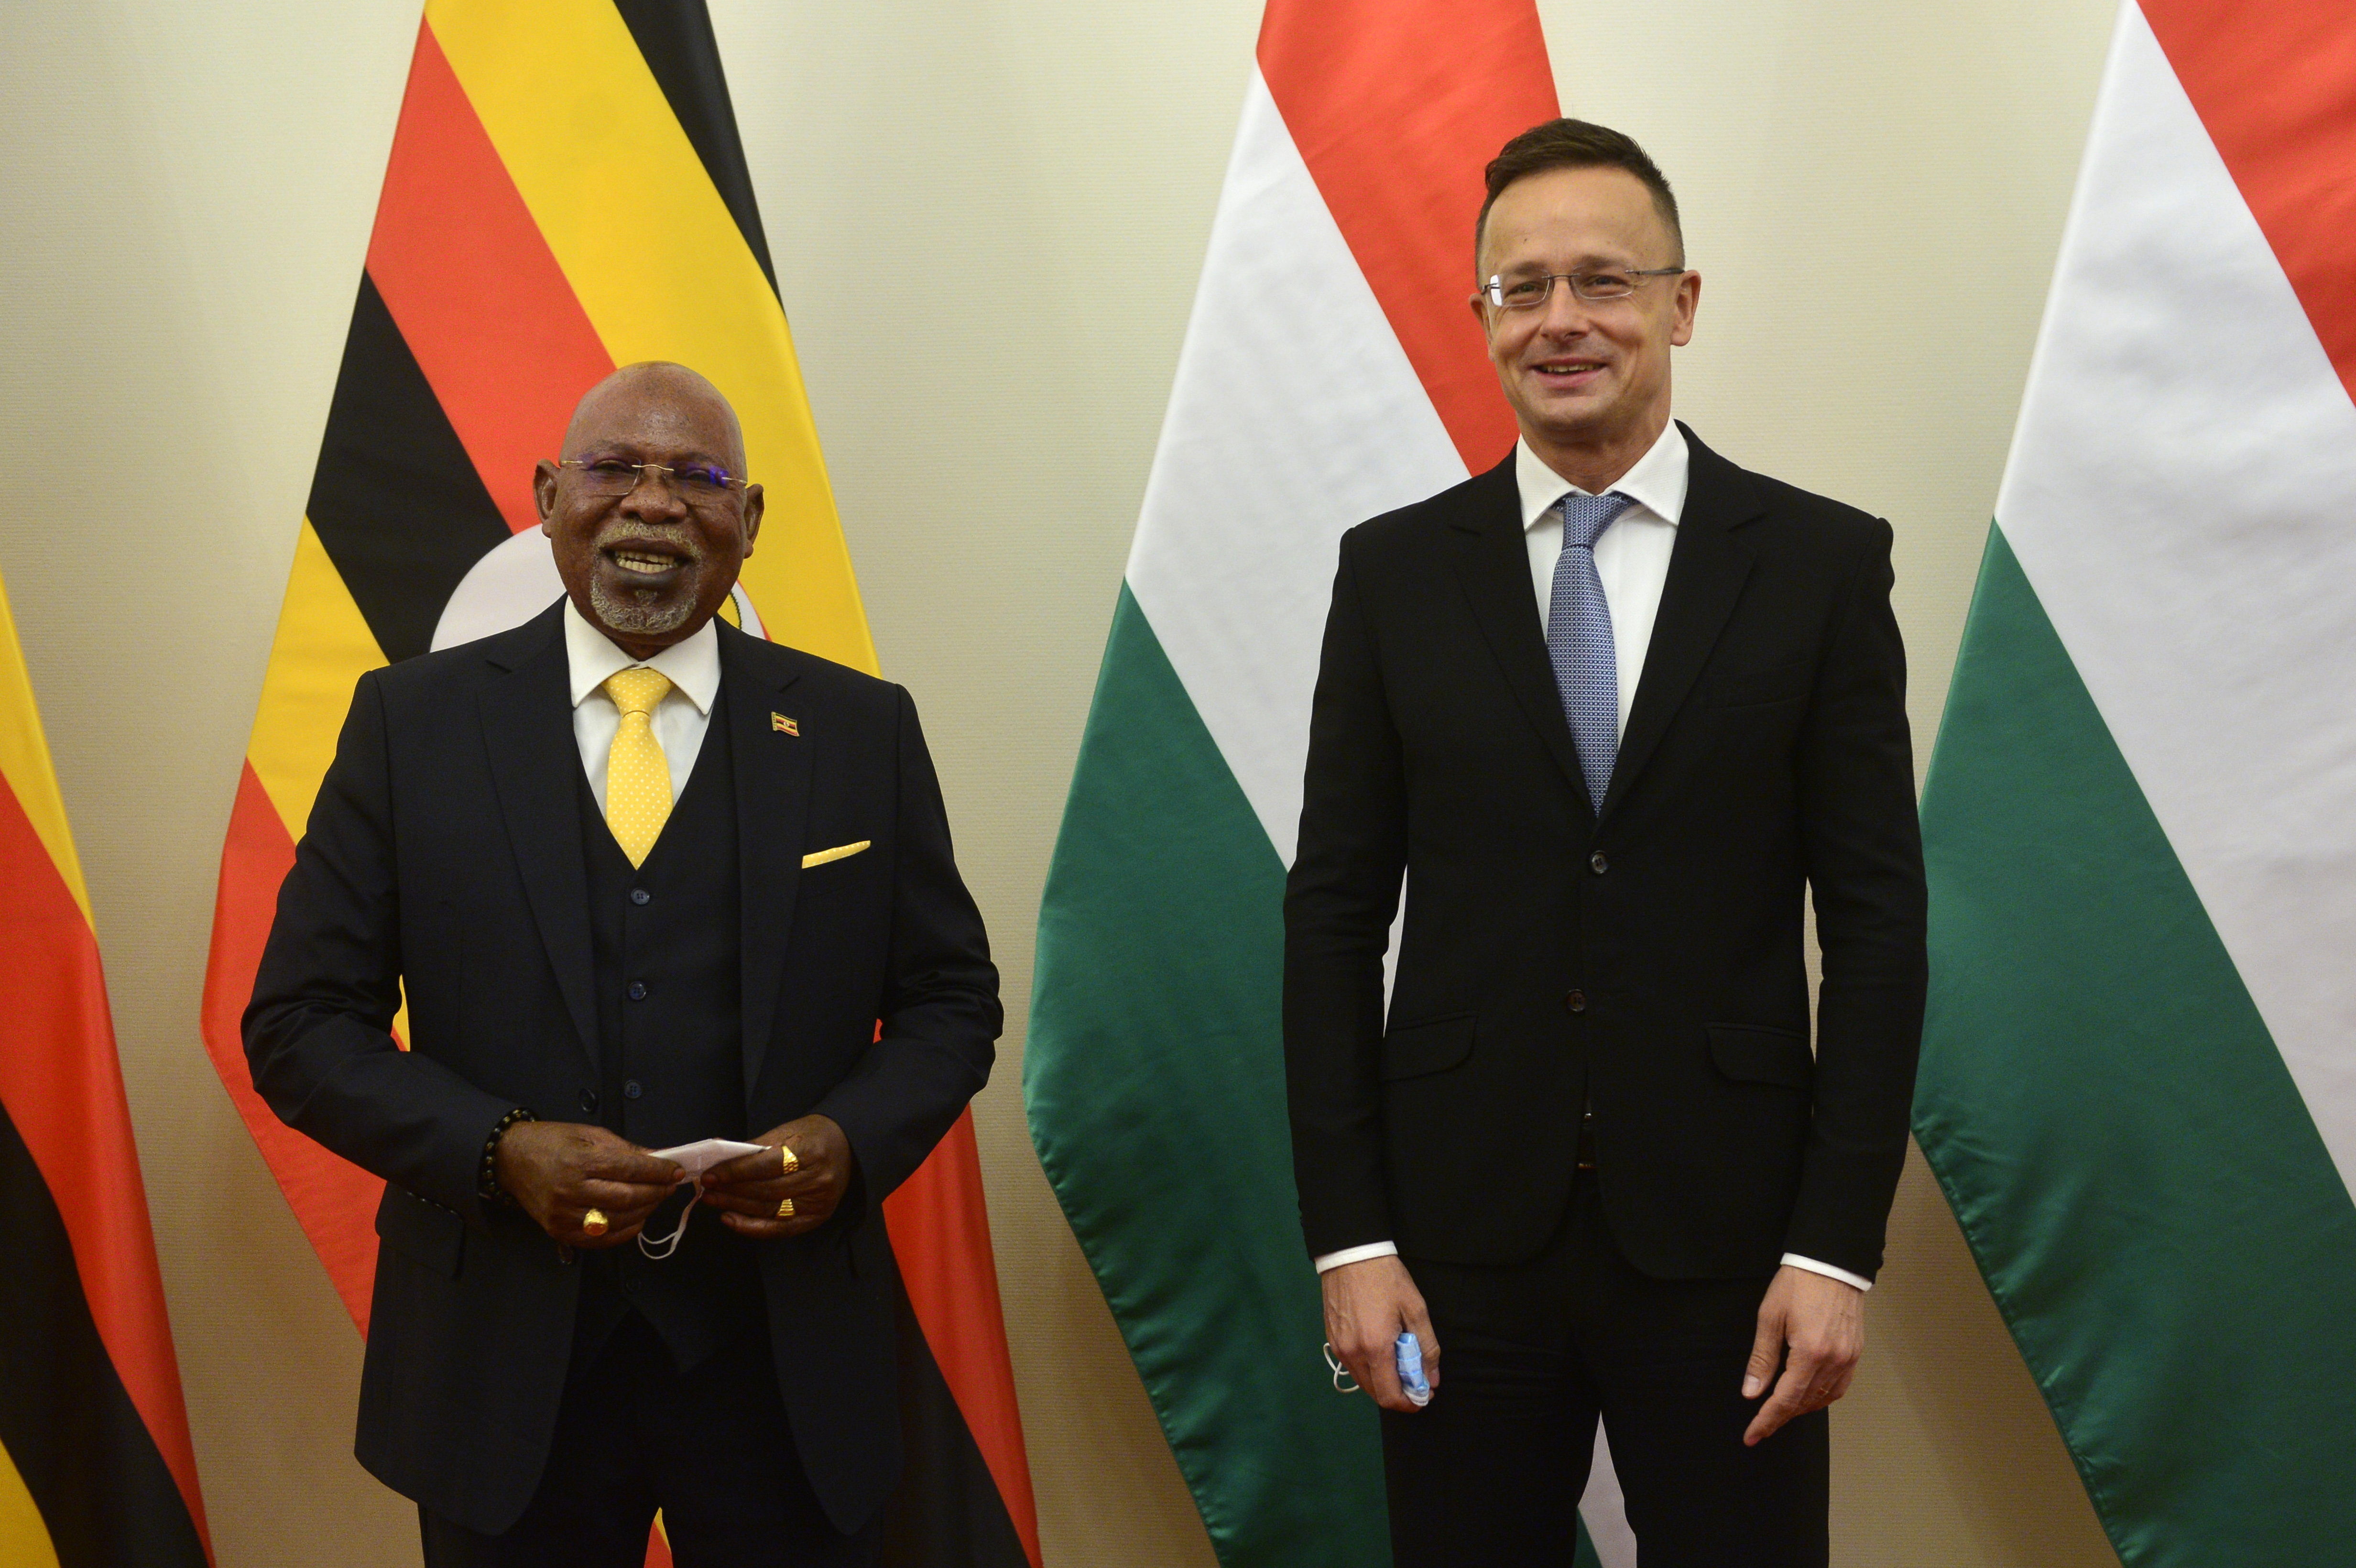 Szijjártó meets with Ugandan counterpart in Budapest